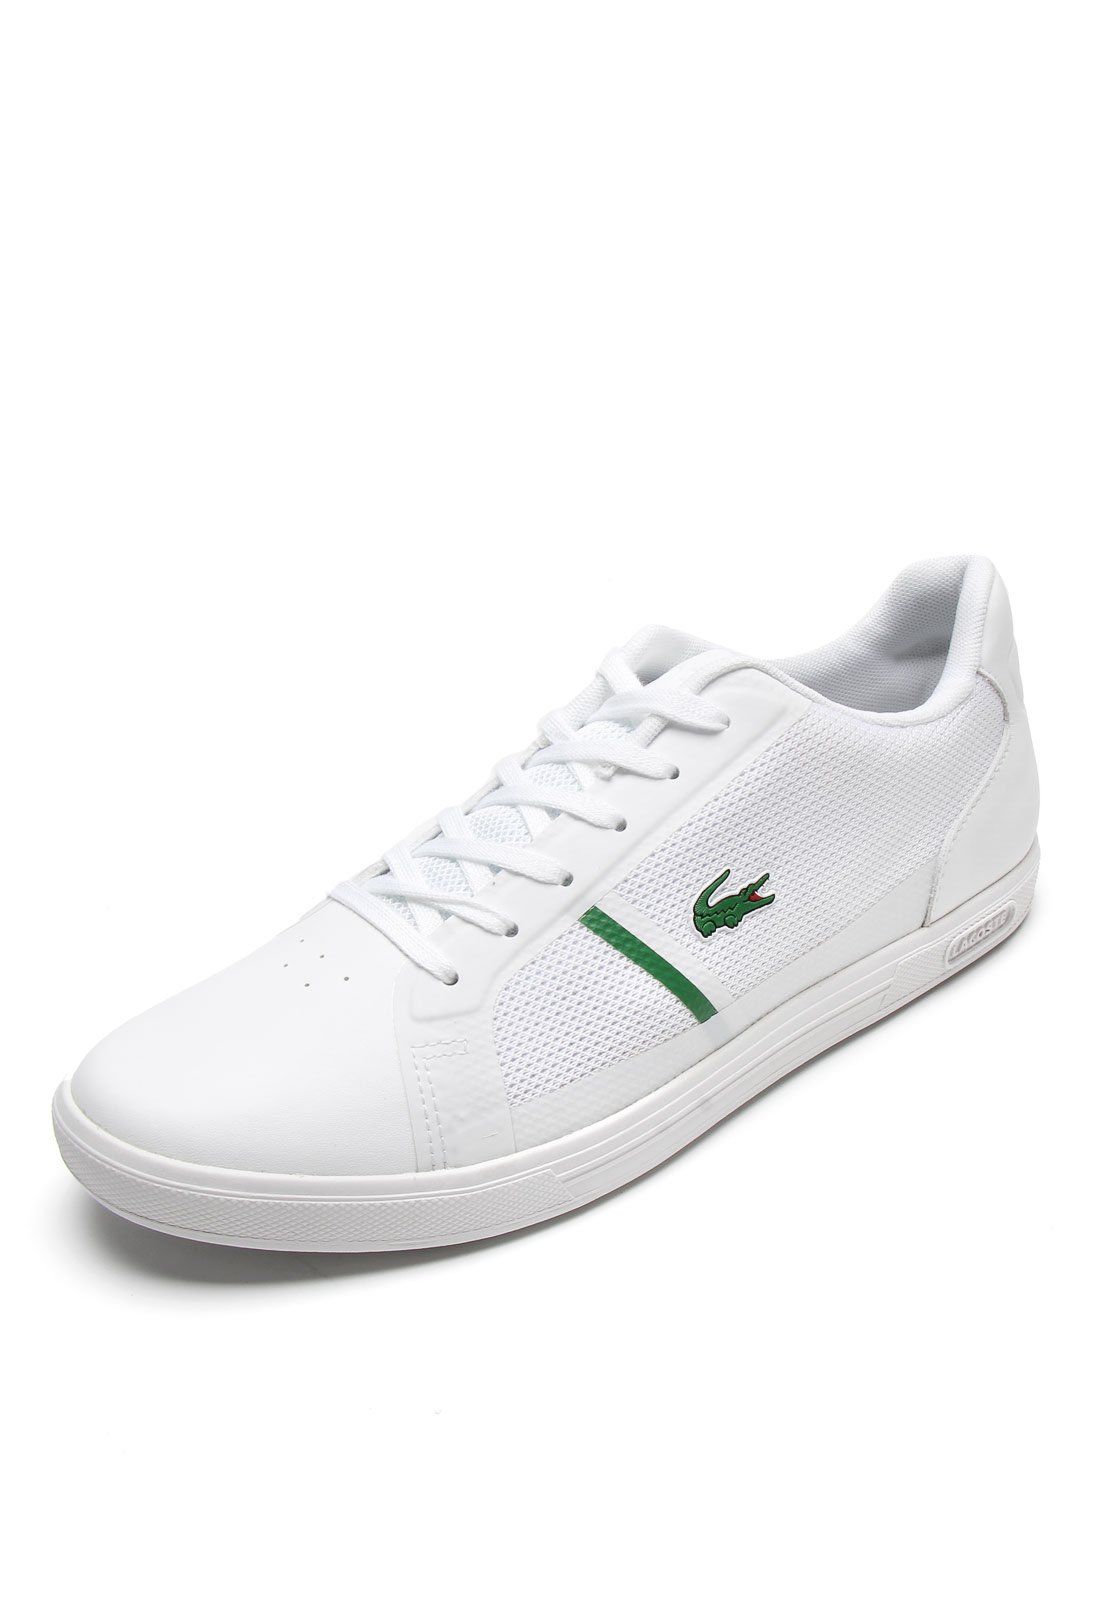 tenis lacoste branco e verde